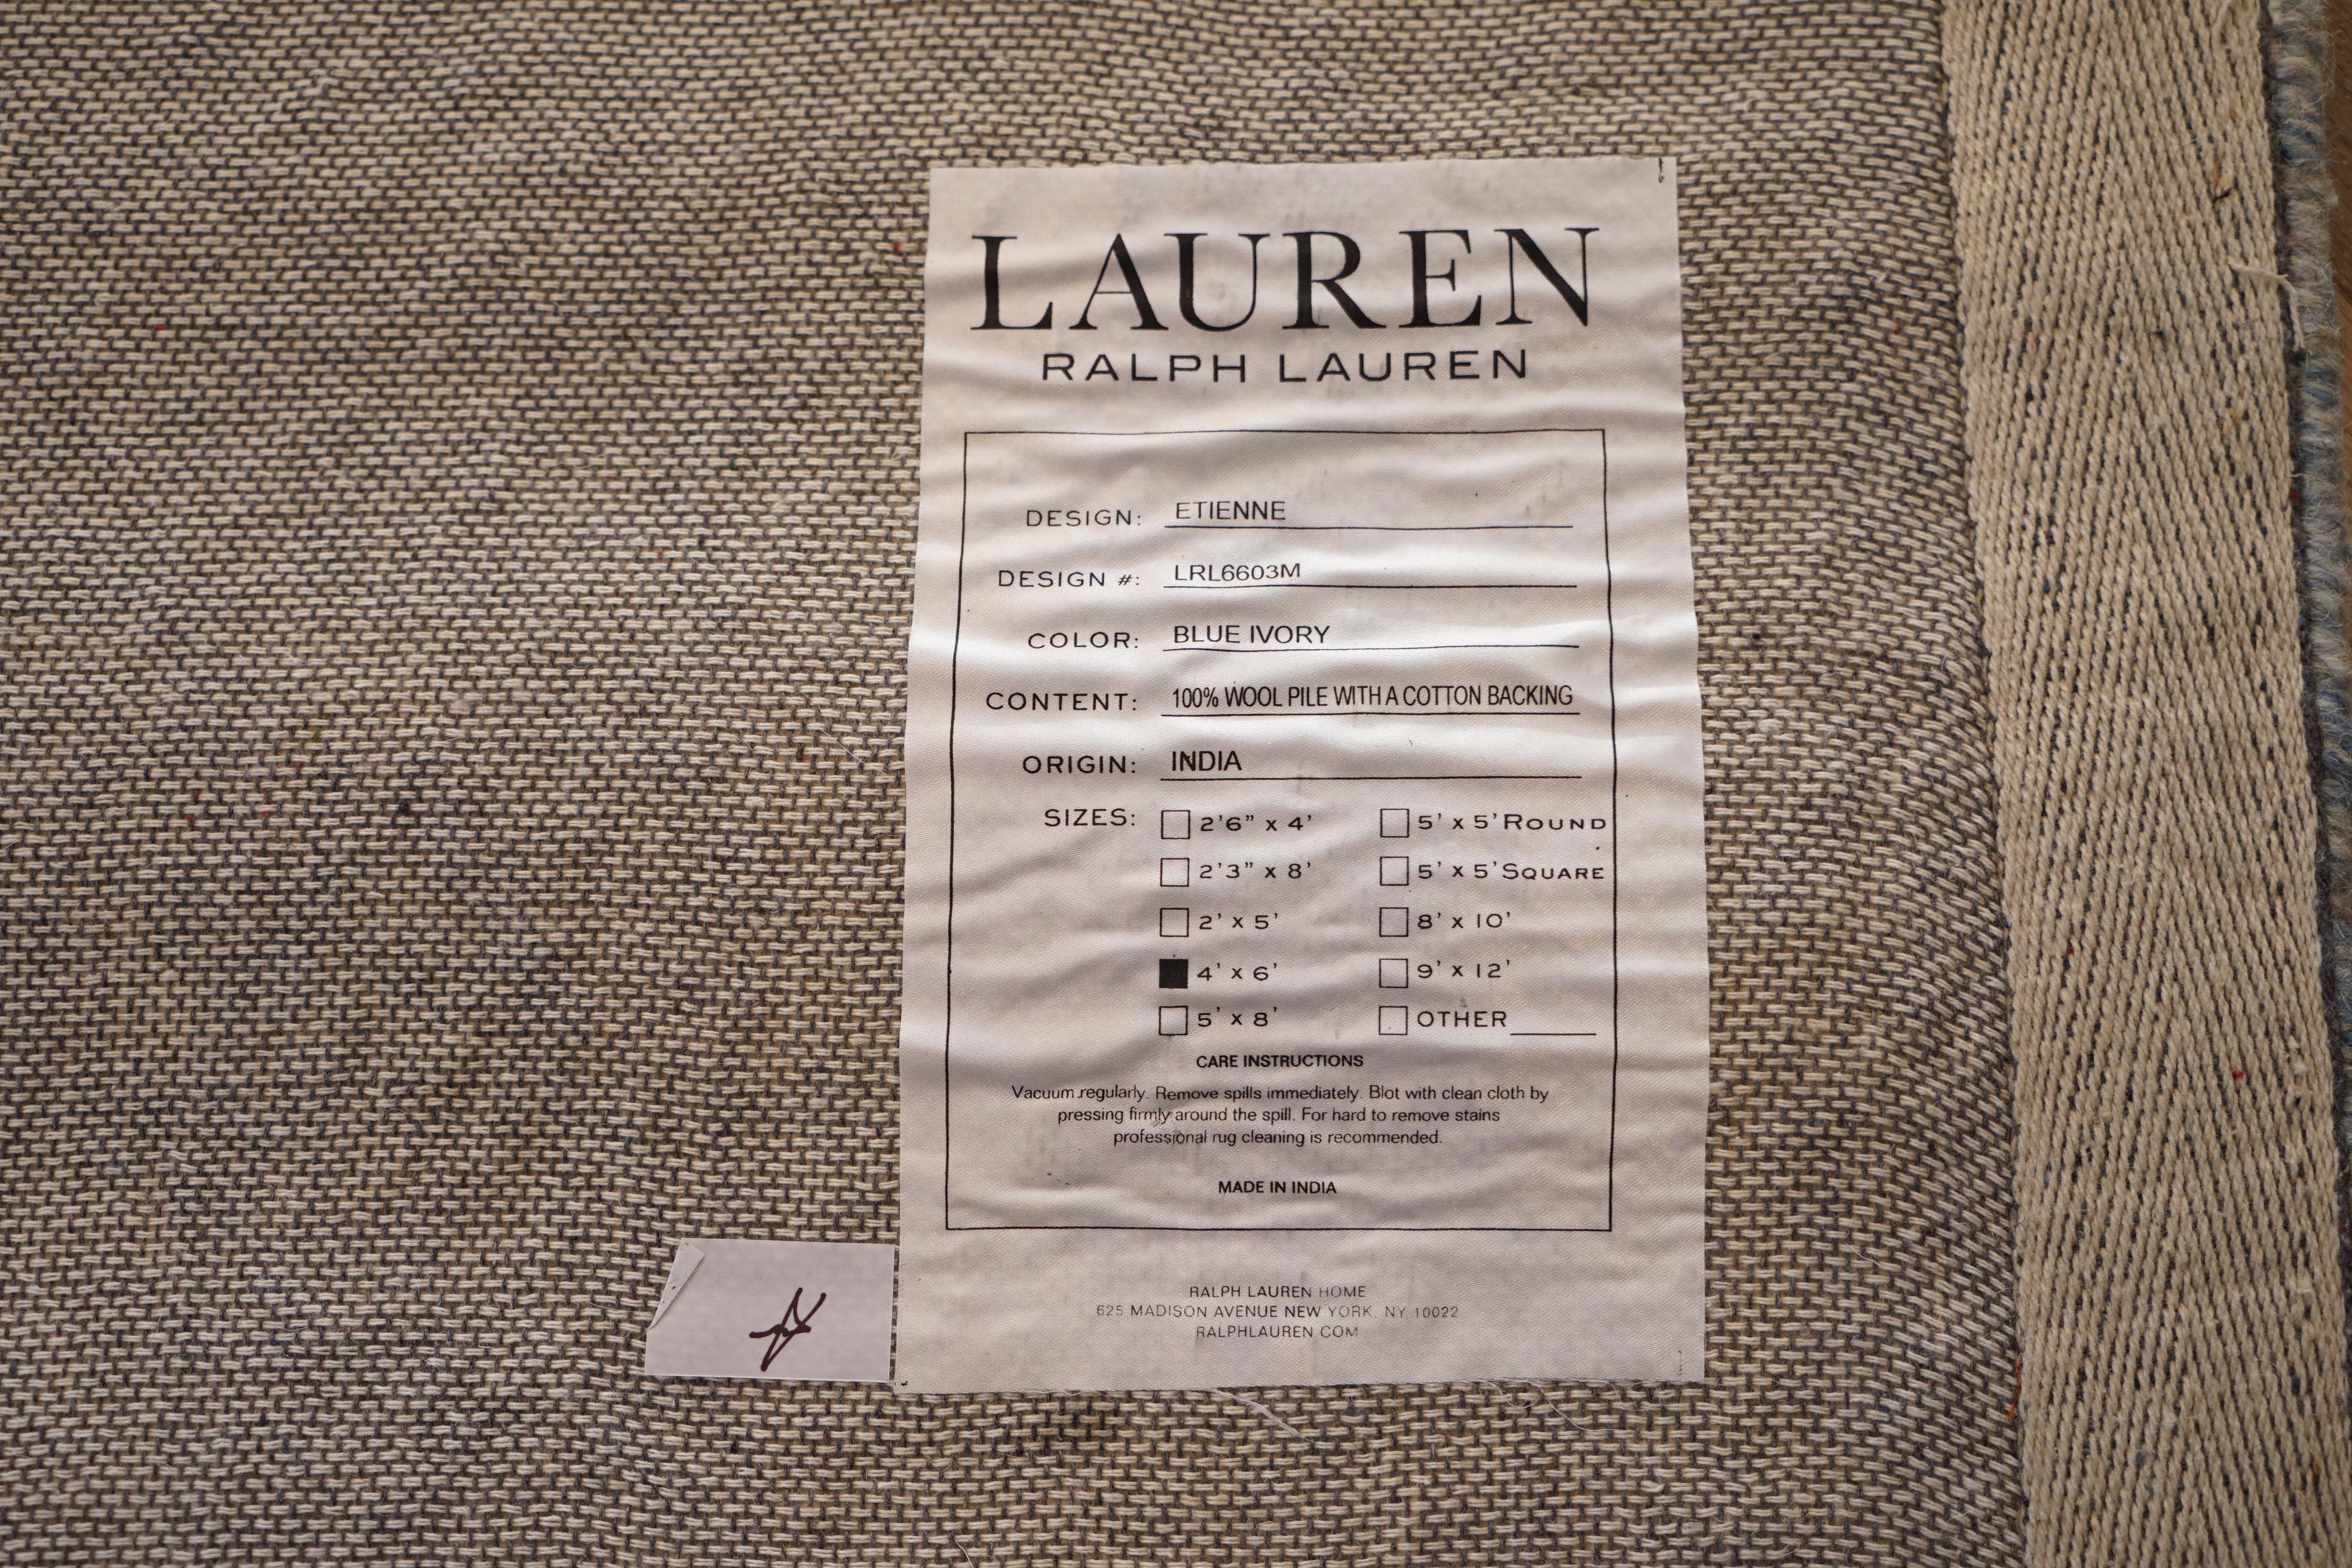 Ralph Lauren 100% Wool Pile Rug Chinese Blue Ivory Finish 4